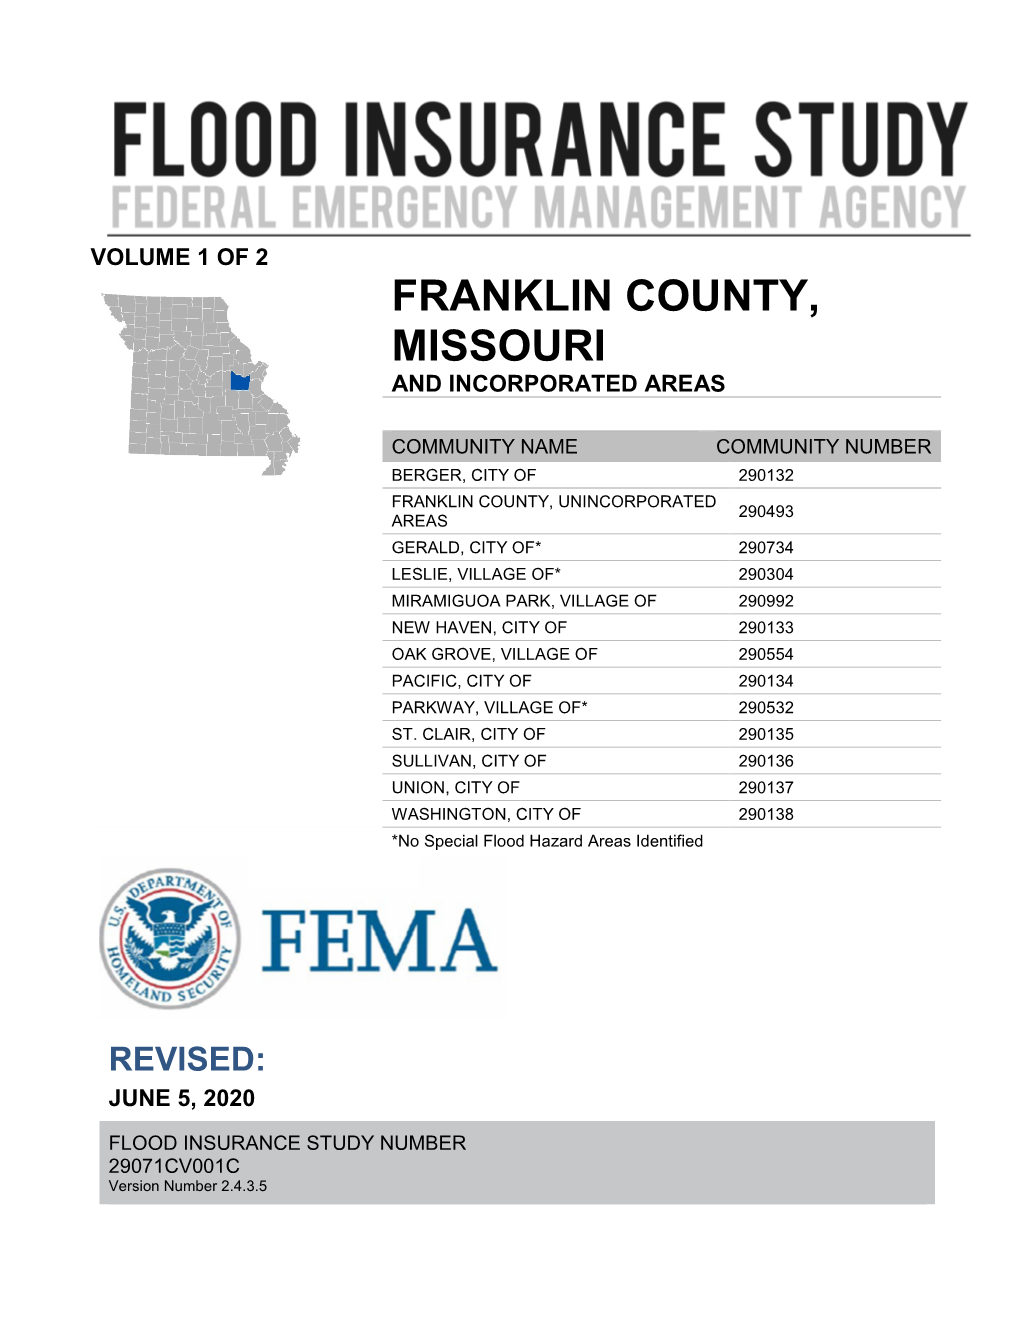 Flood Insurance Study Vol 1 of 2 June 5, 2020